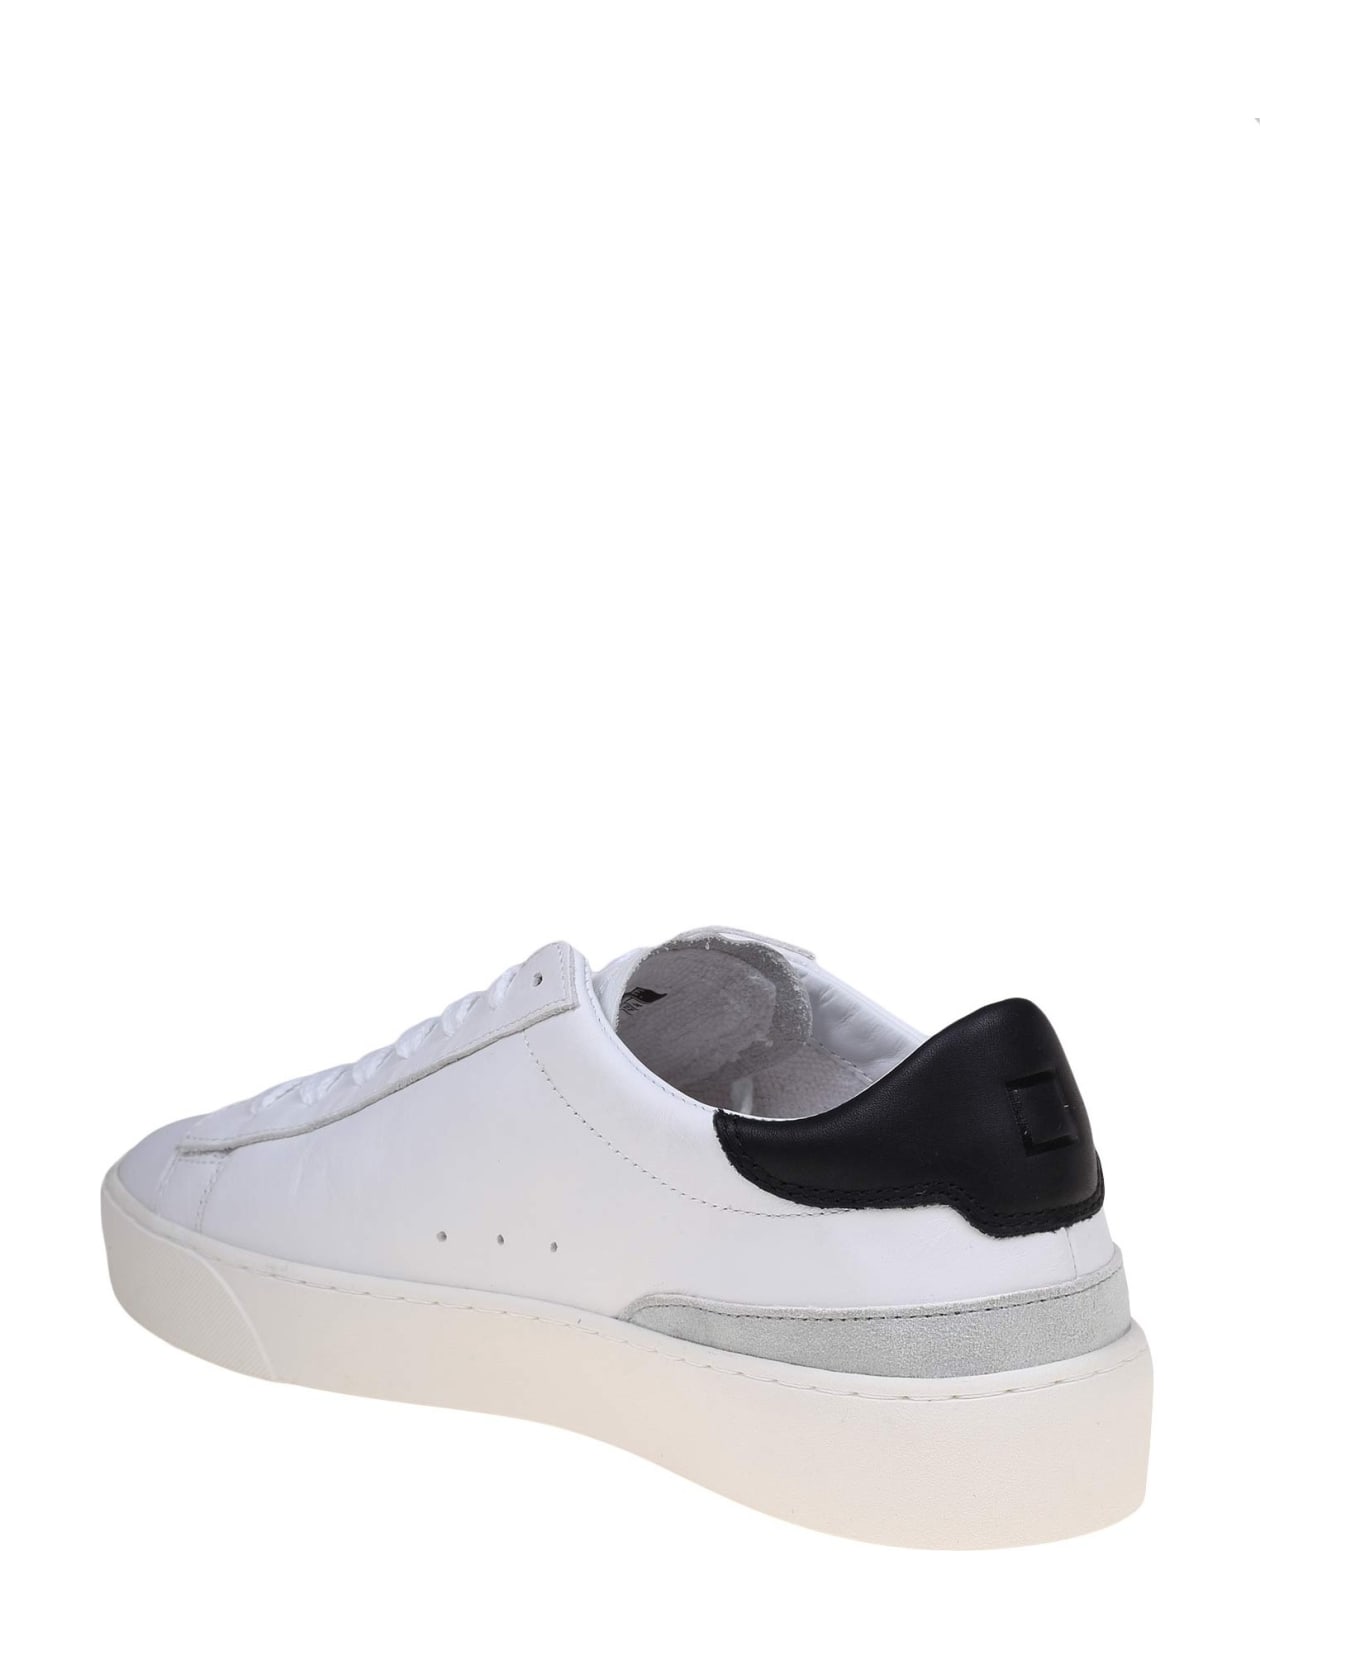 D.A.T.E. Sonica Sneakers In White/black Leather - White/Black